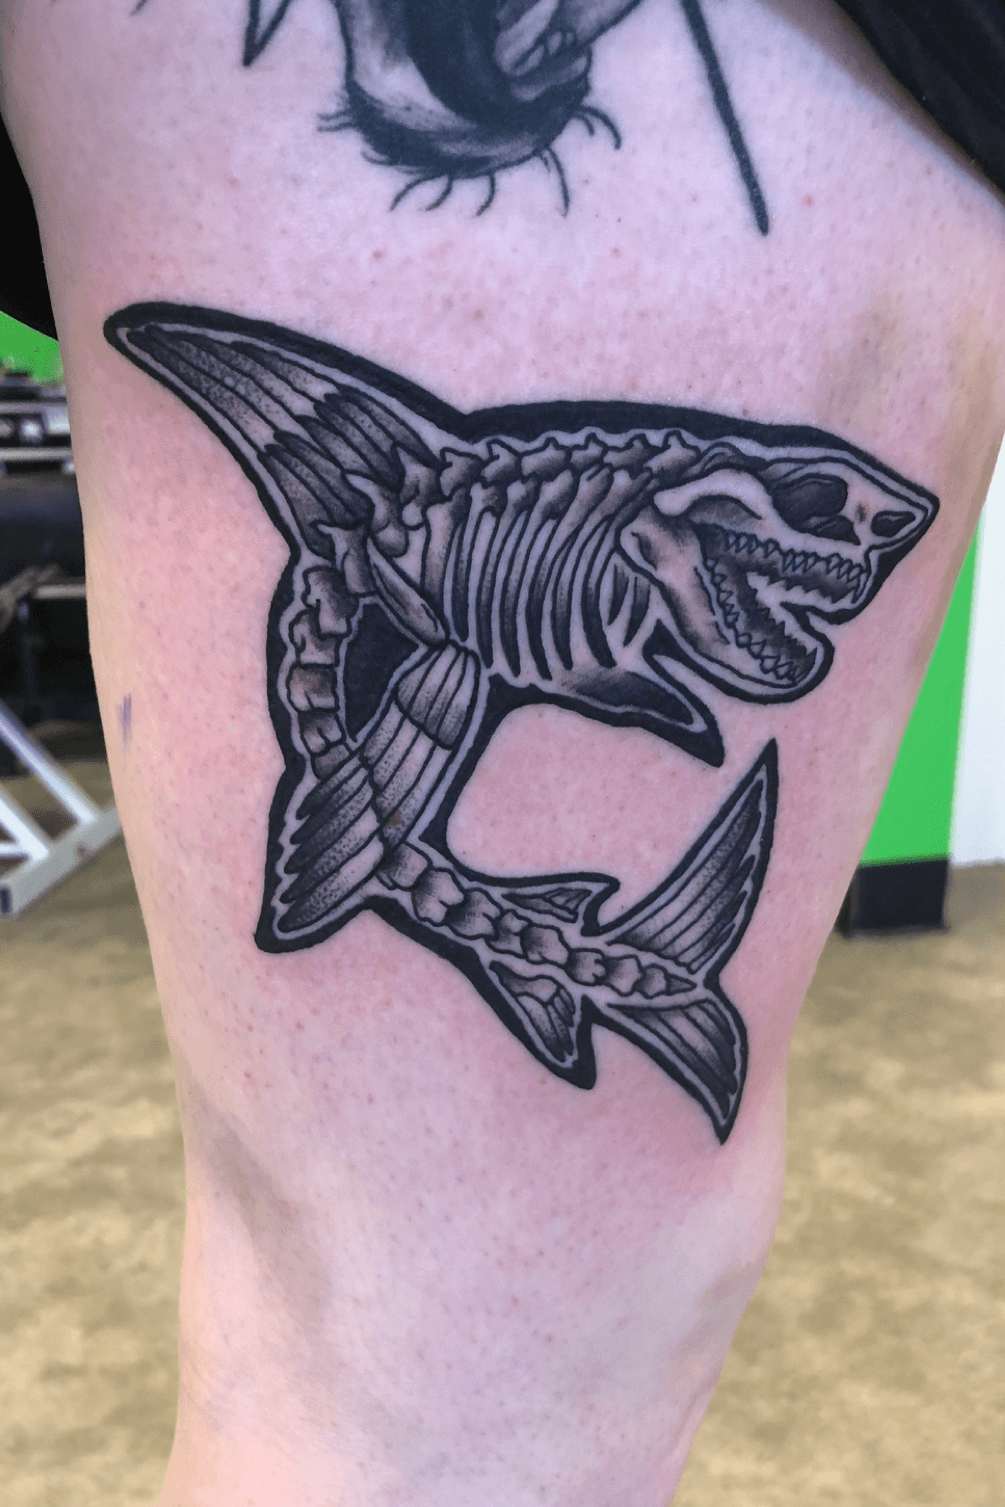 Skull and Shark tattoo by Jurgis Mikalauskas  Post 21009  Shark tattoos  Pirate skull tattoos Nature tattoos